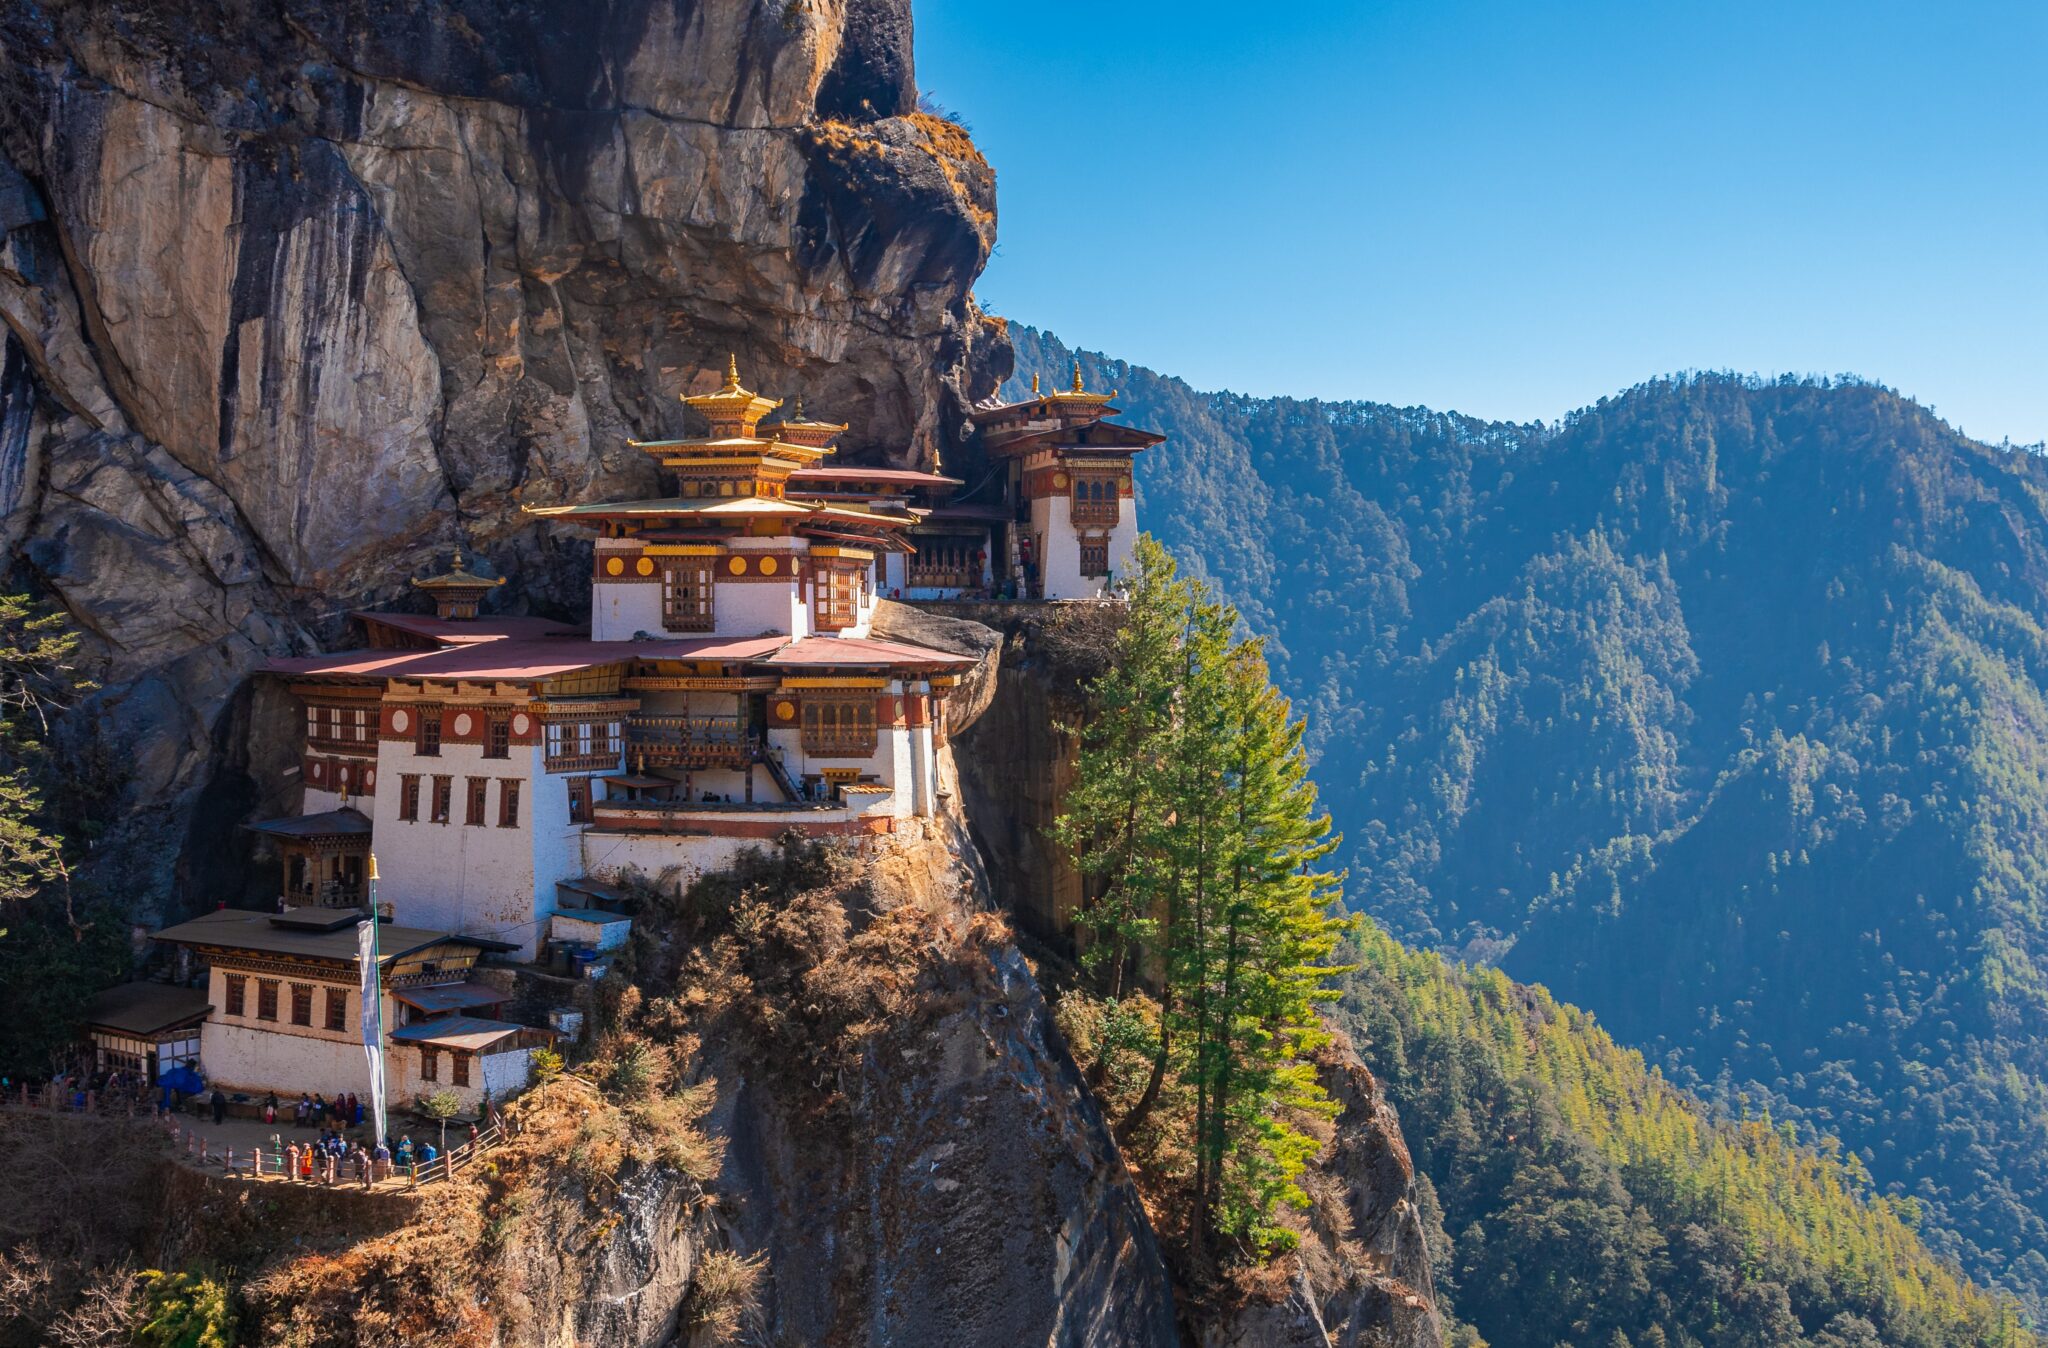 how much bhutan trip cost